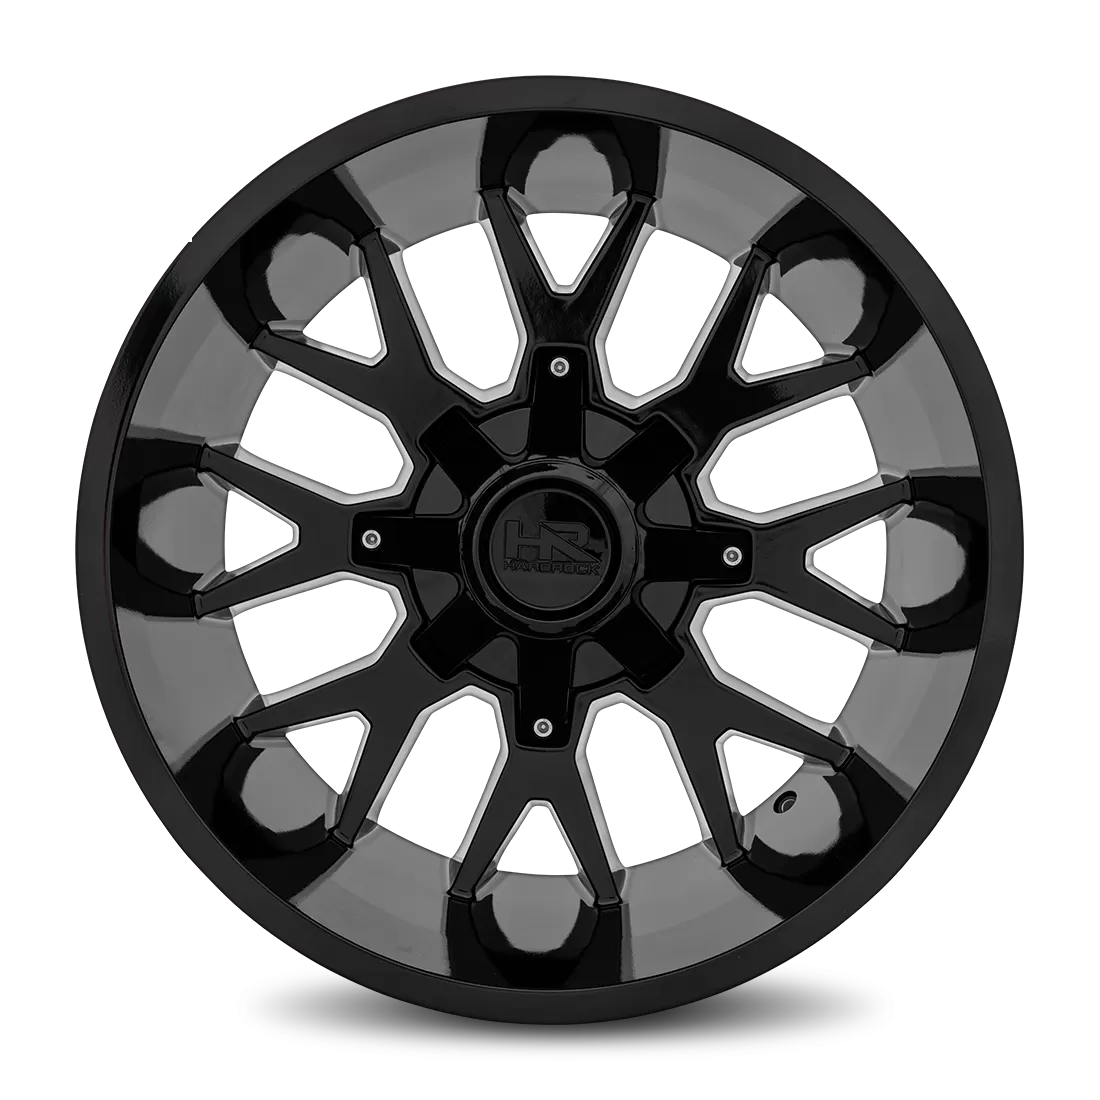 Hardrock Offroad Affliction Aluminum Wheel 20x12 6x135/139.7 -44 108 Gloss Black - H700-201237144GB